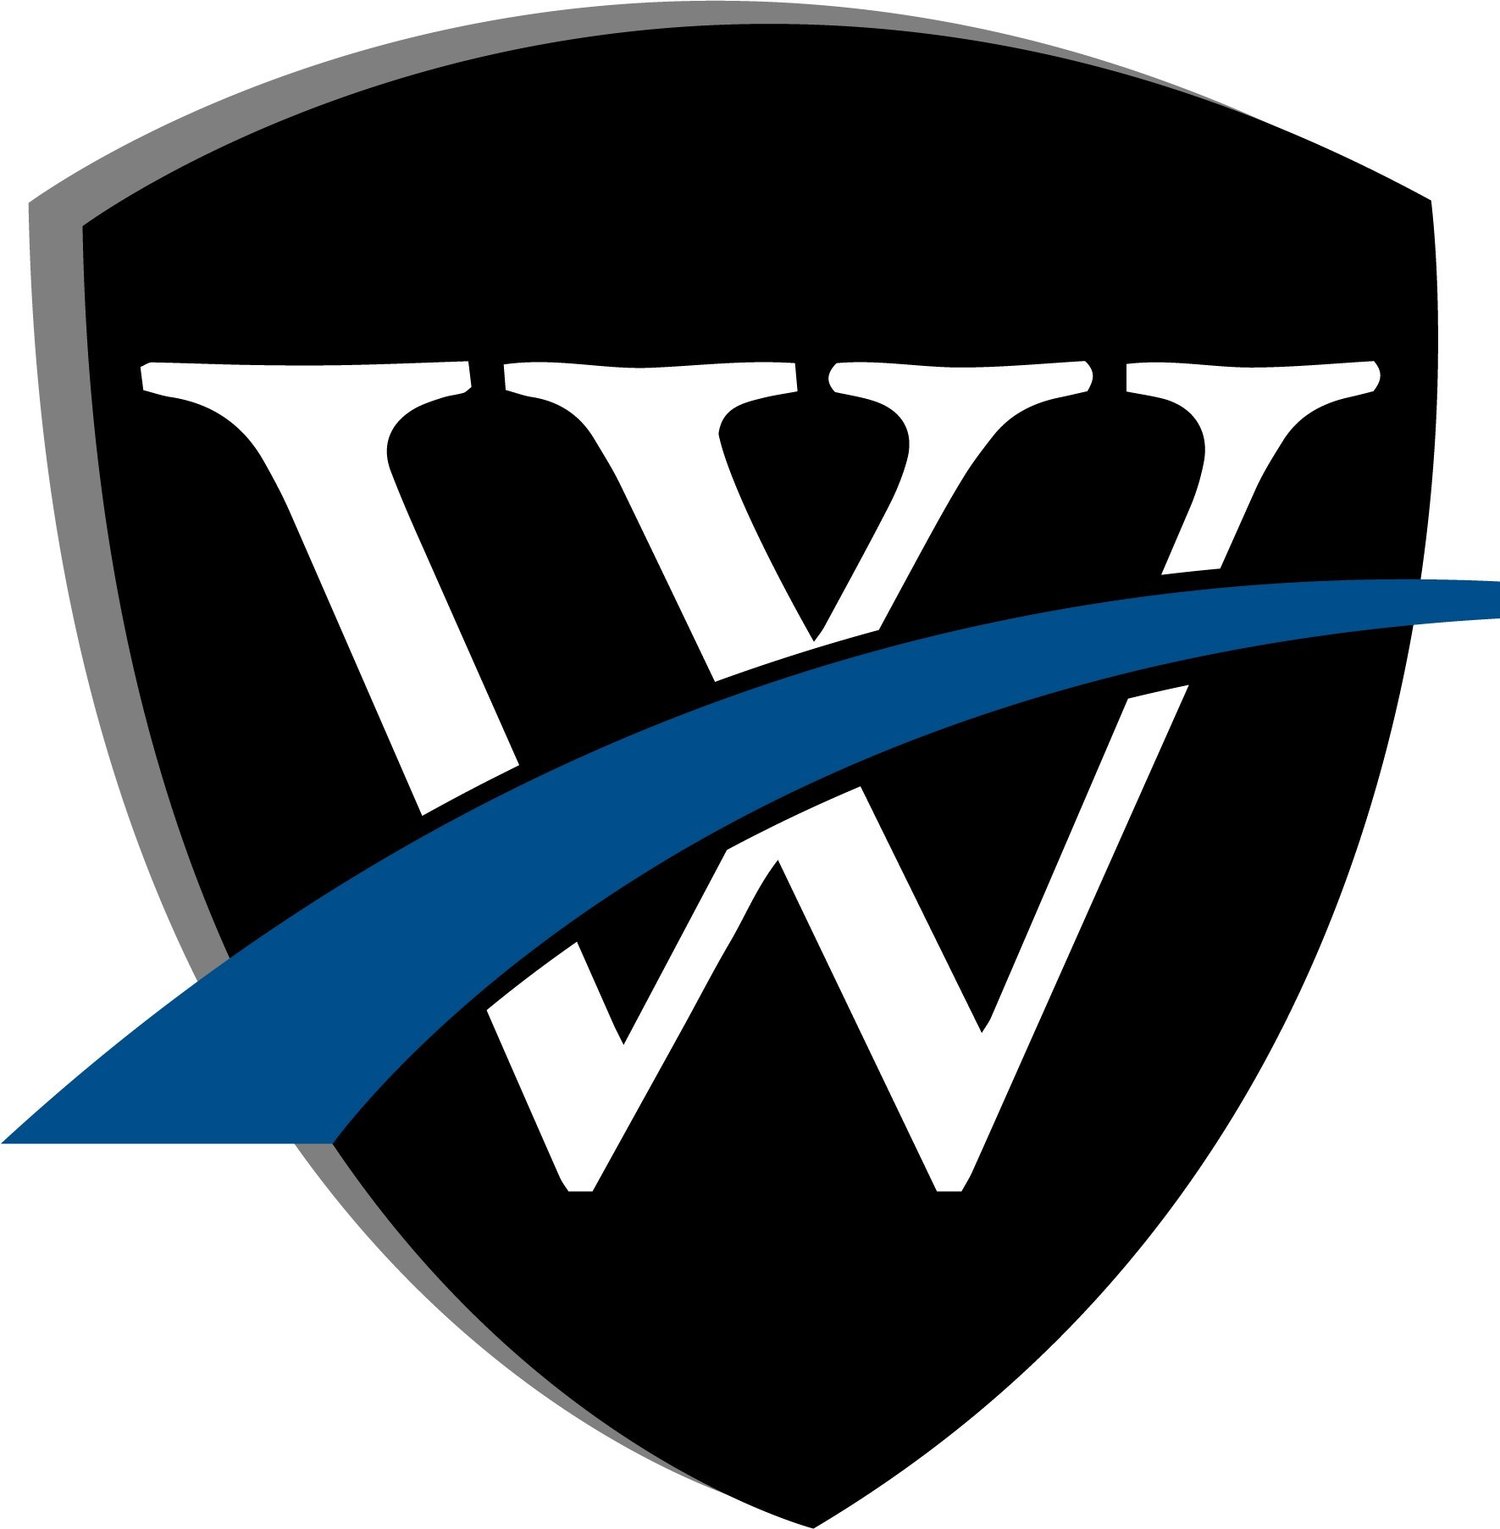 Wheeler's Advisory Services SML, LLC